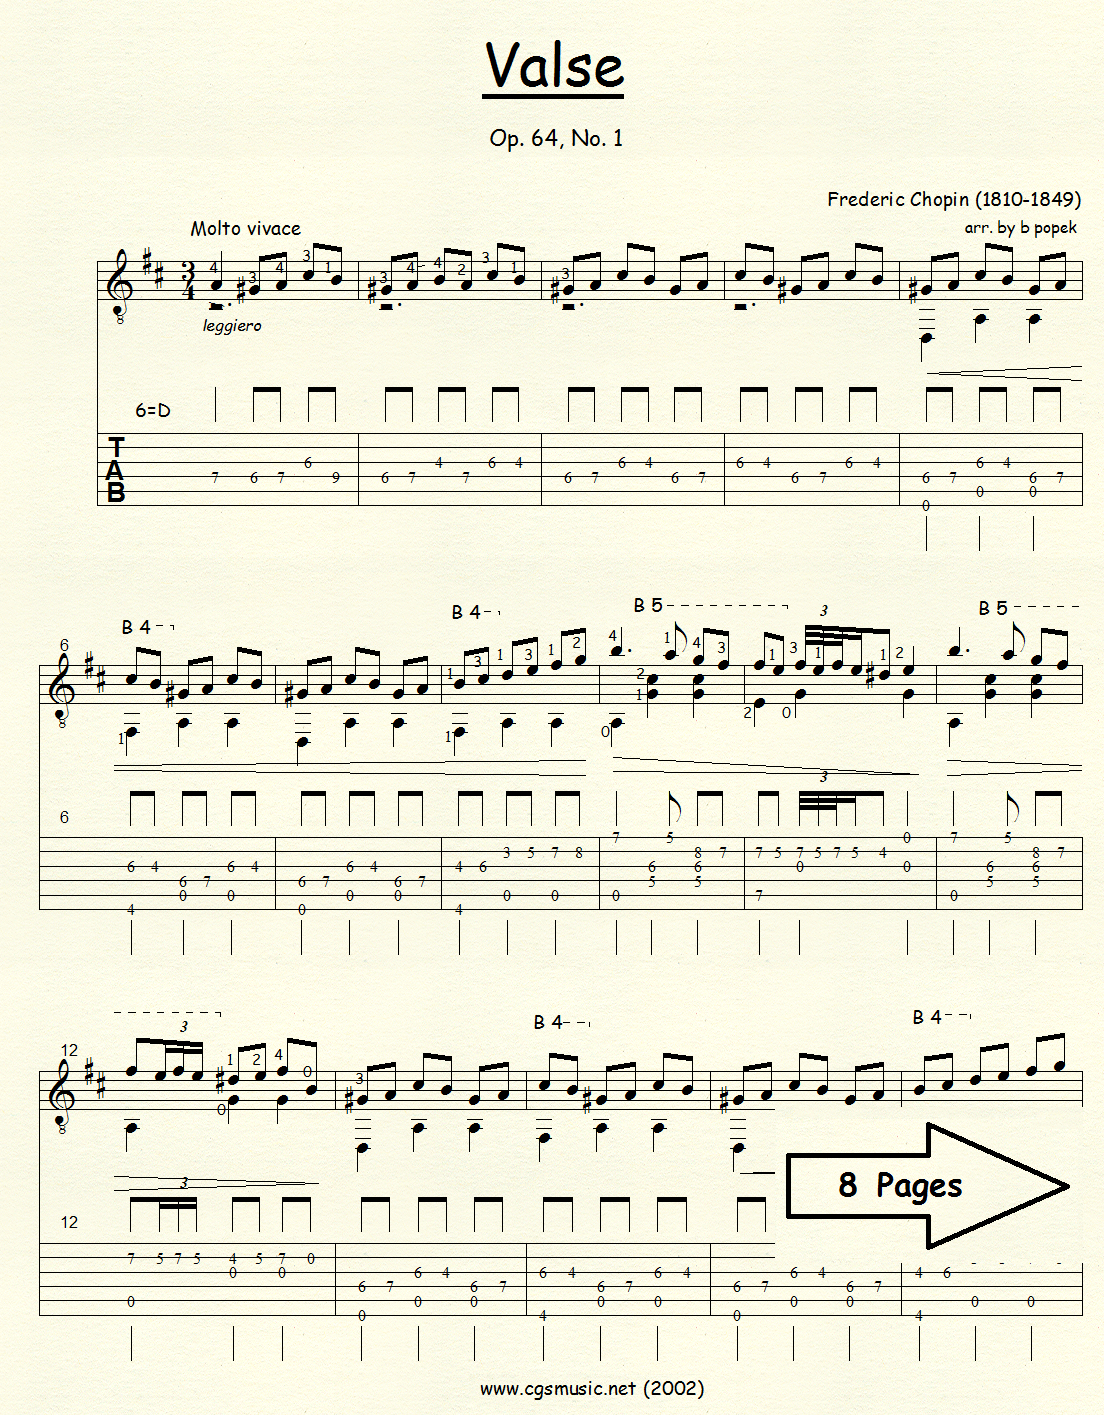 Valse Op 64 #1 (Chopin) for Classical Guitar in Tablature